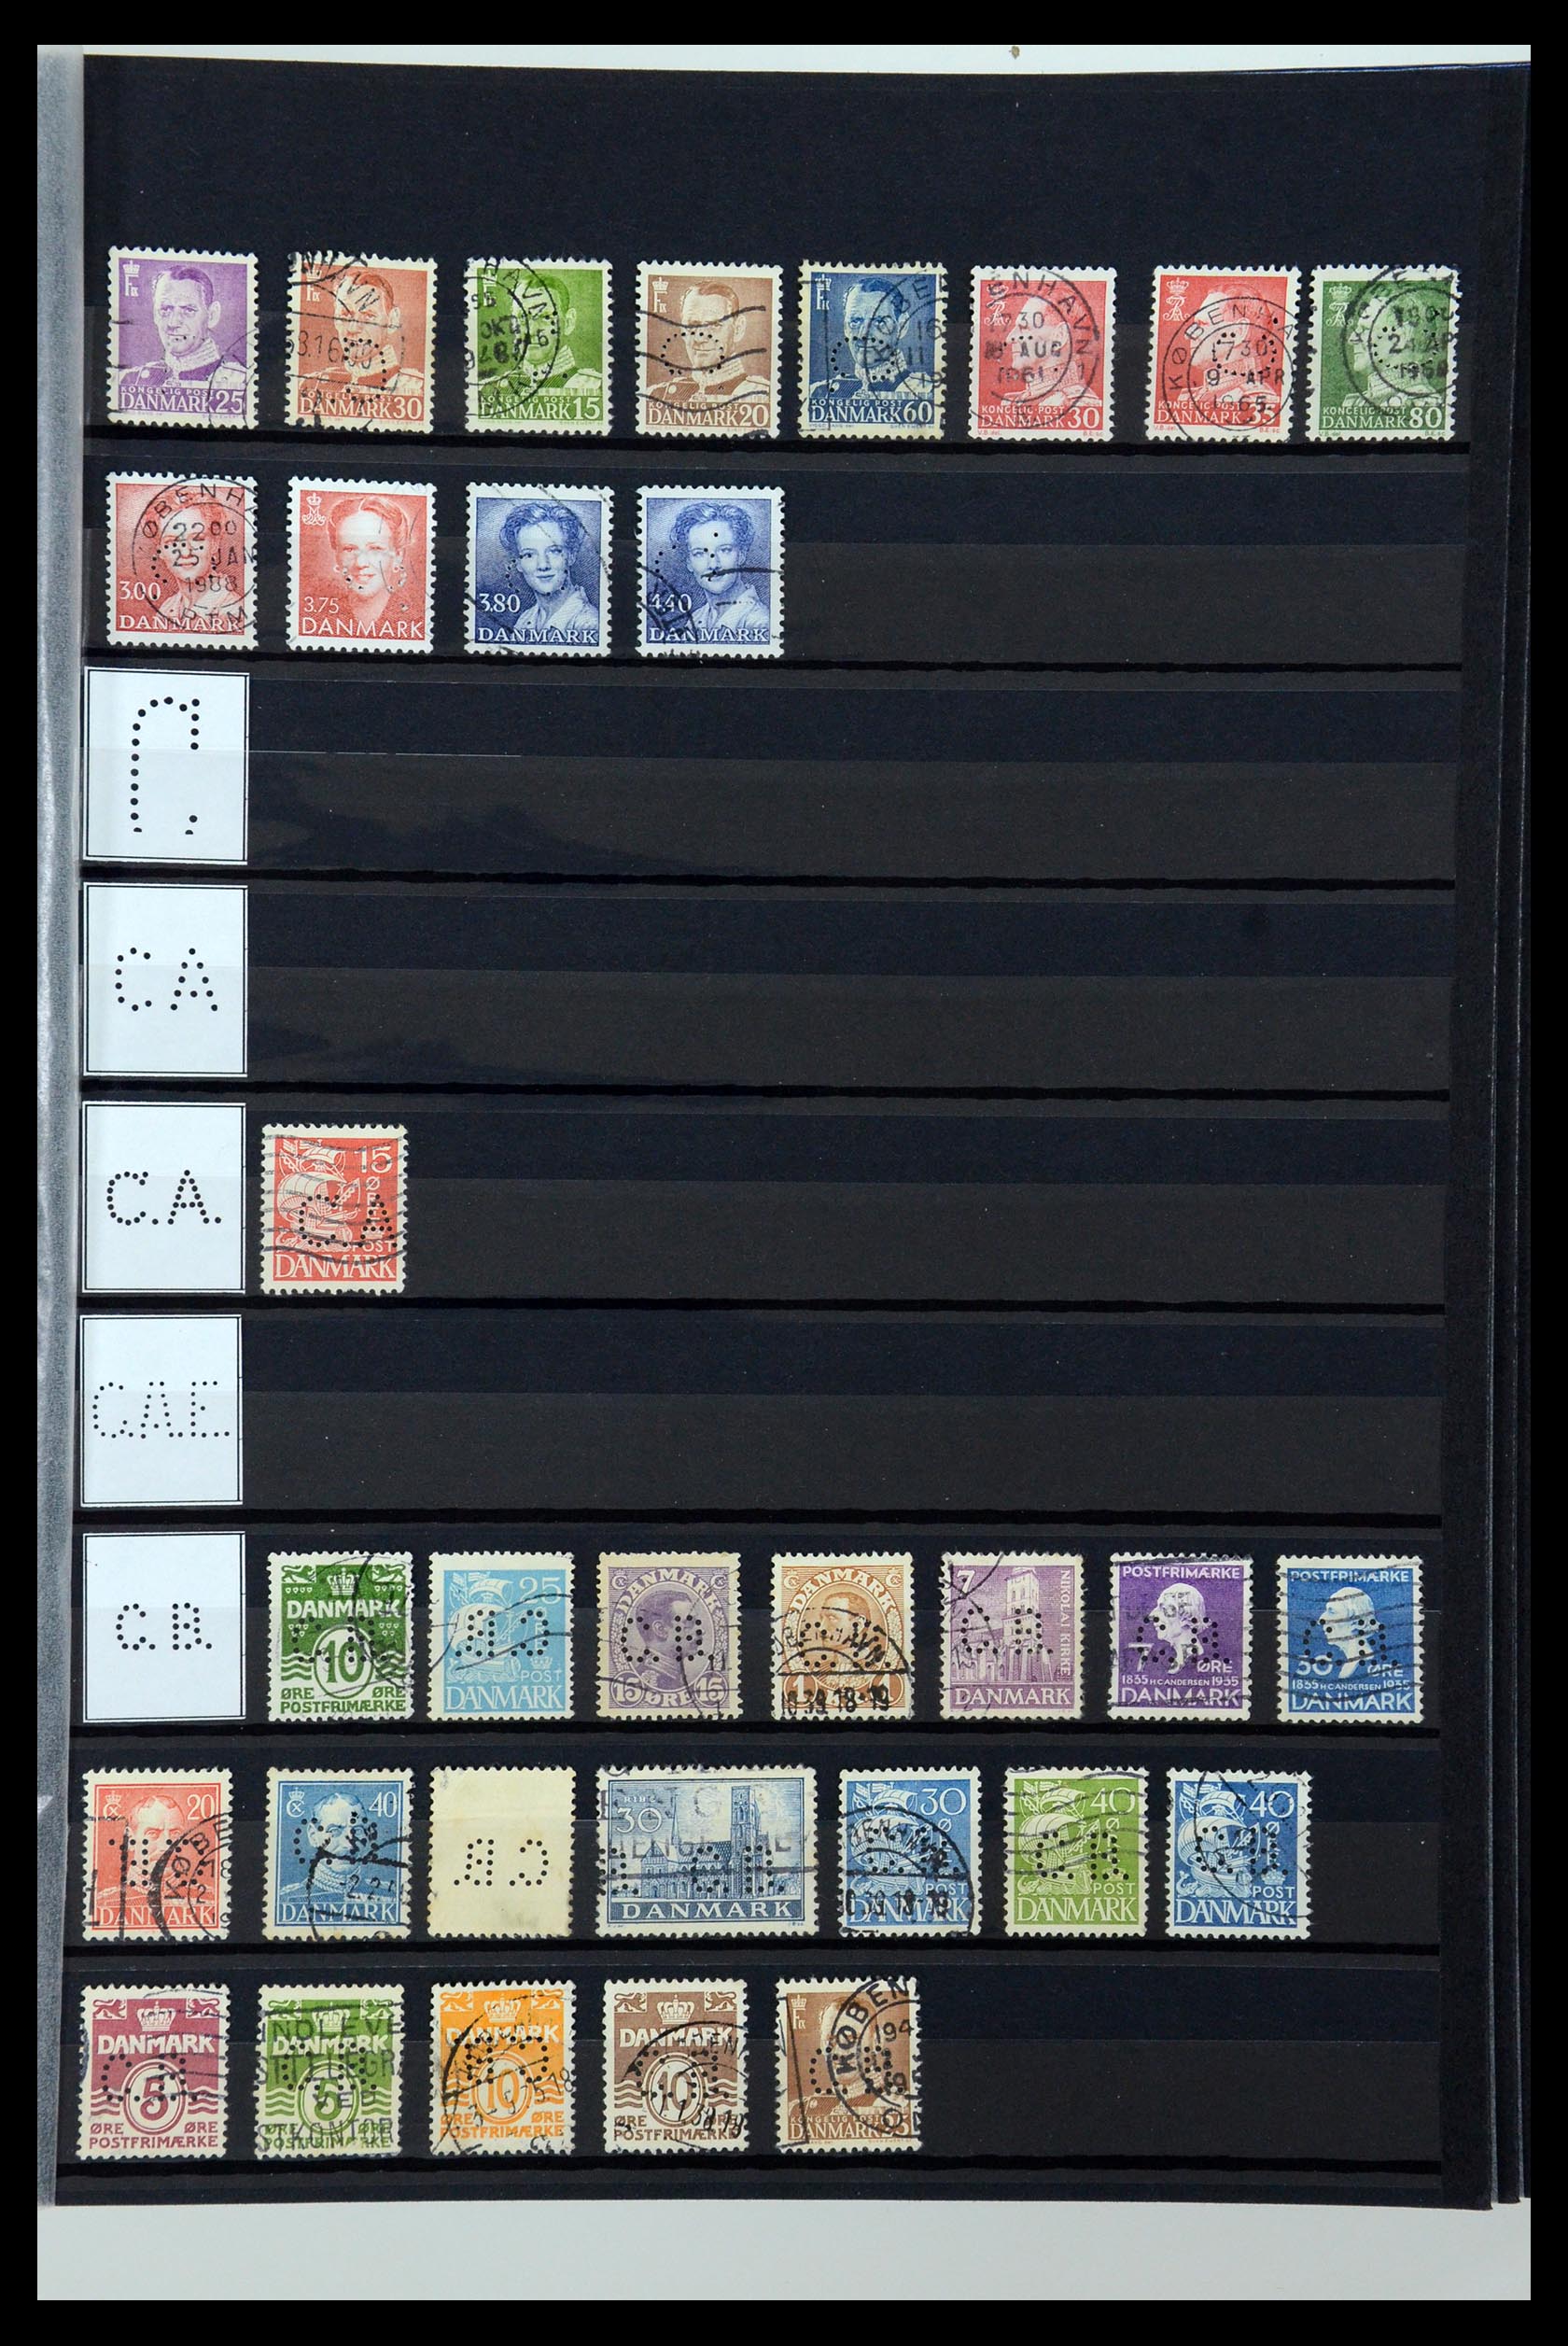 36396 023 - Stamp collection 36396 Denmark perfins.